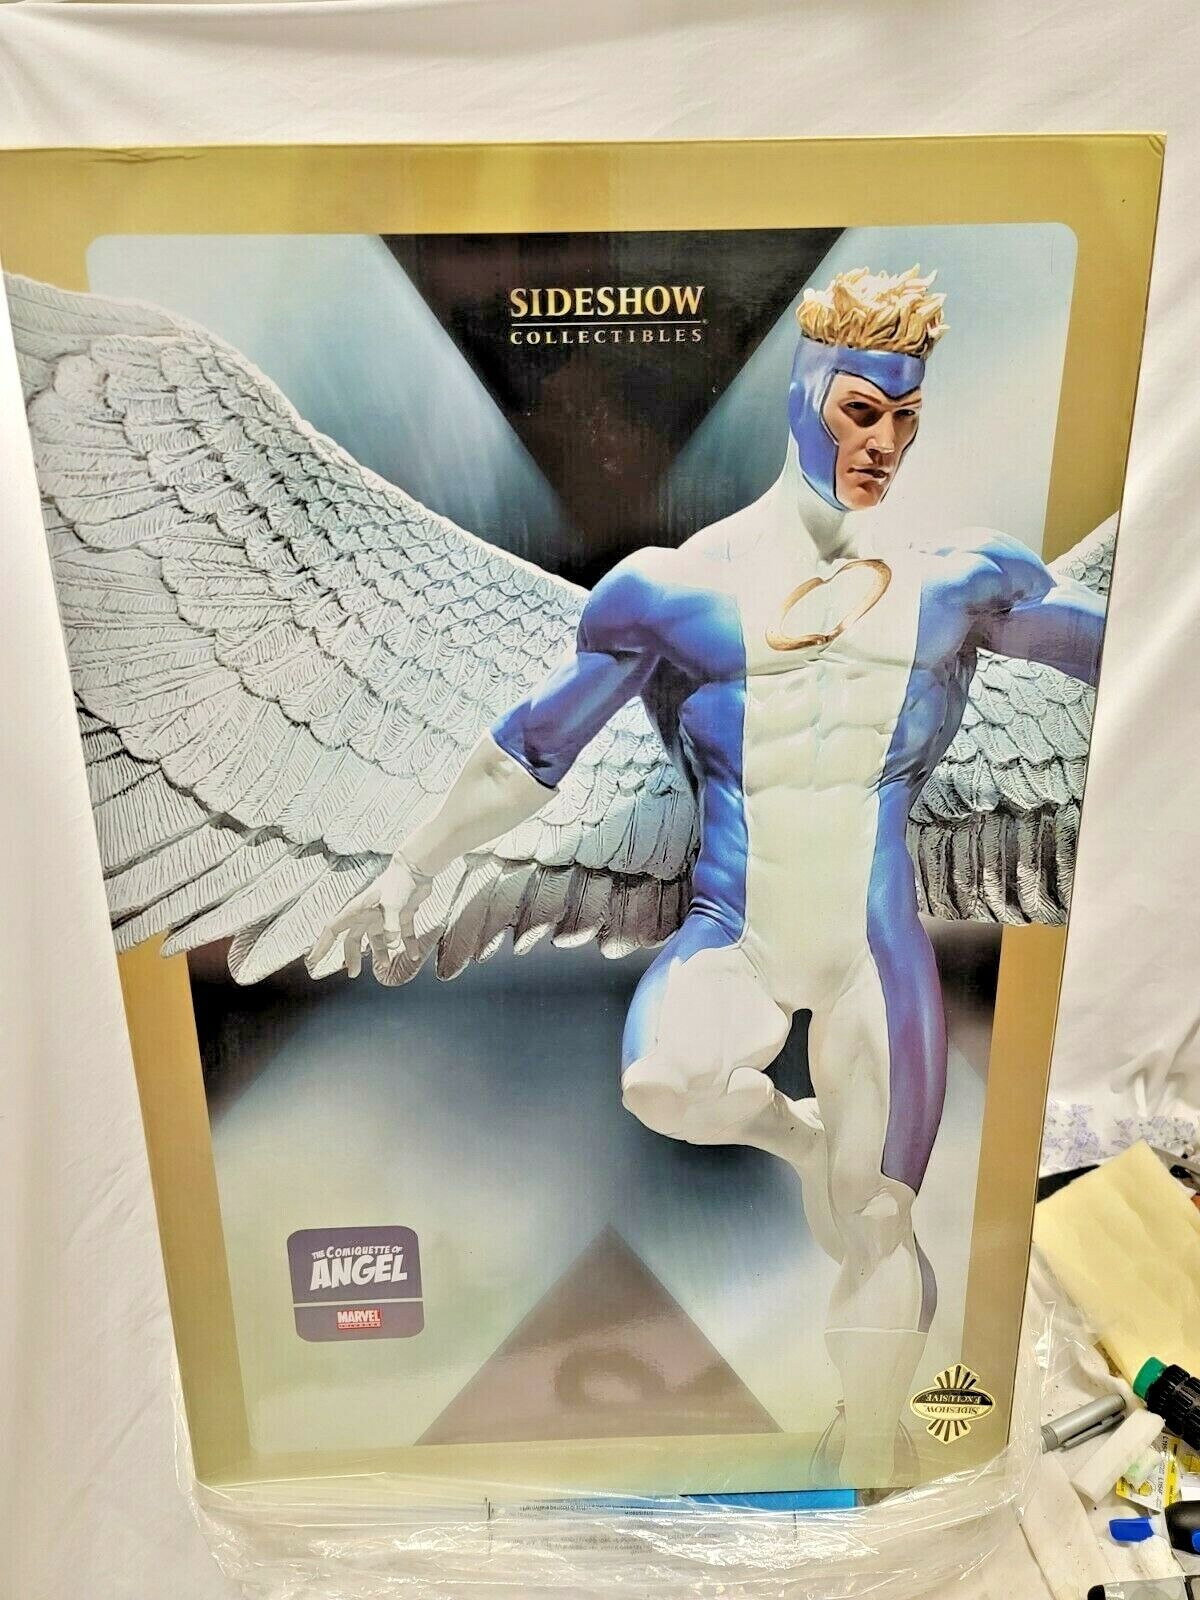  SIDESHOW ANGEL POLYSTONE STATUE COMIQUETTE EXCLUSIVE X-MEN Premium FIGURE Print